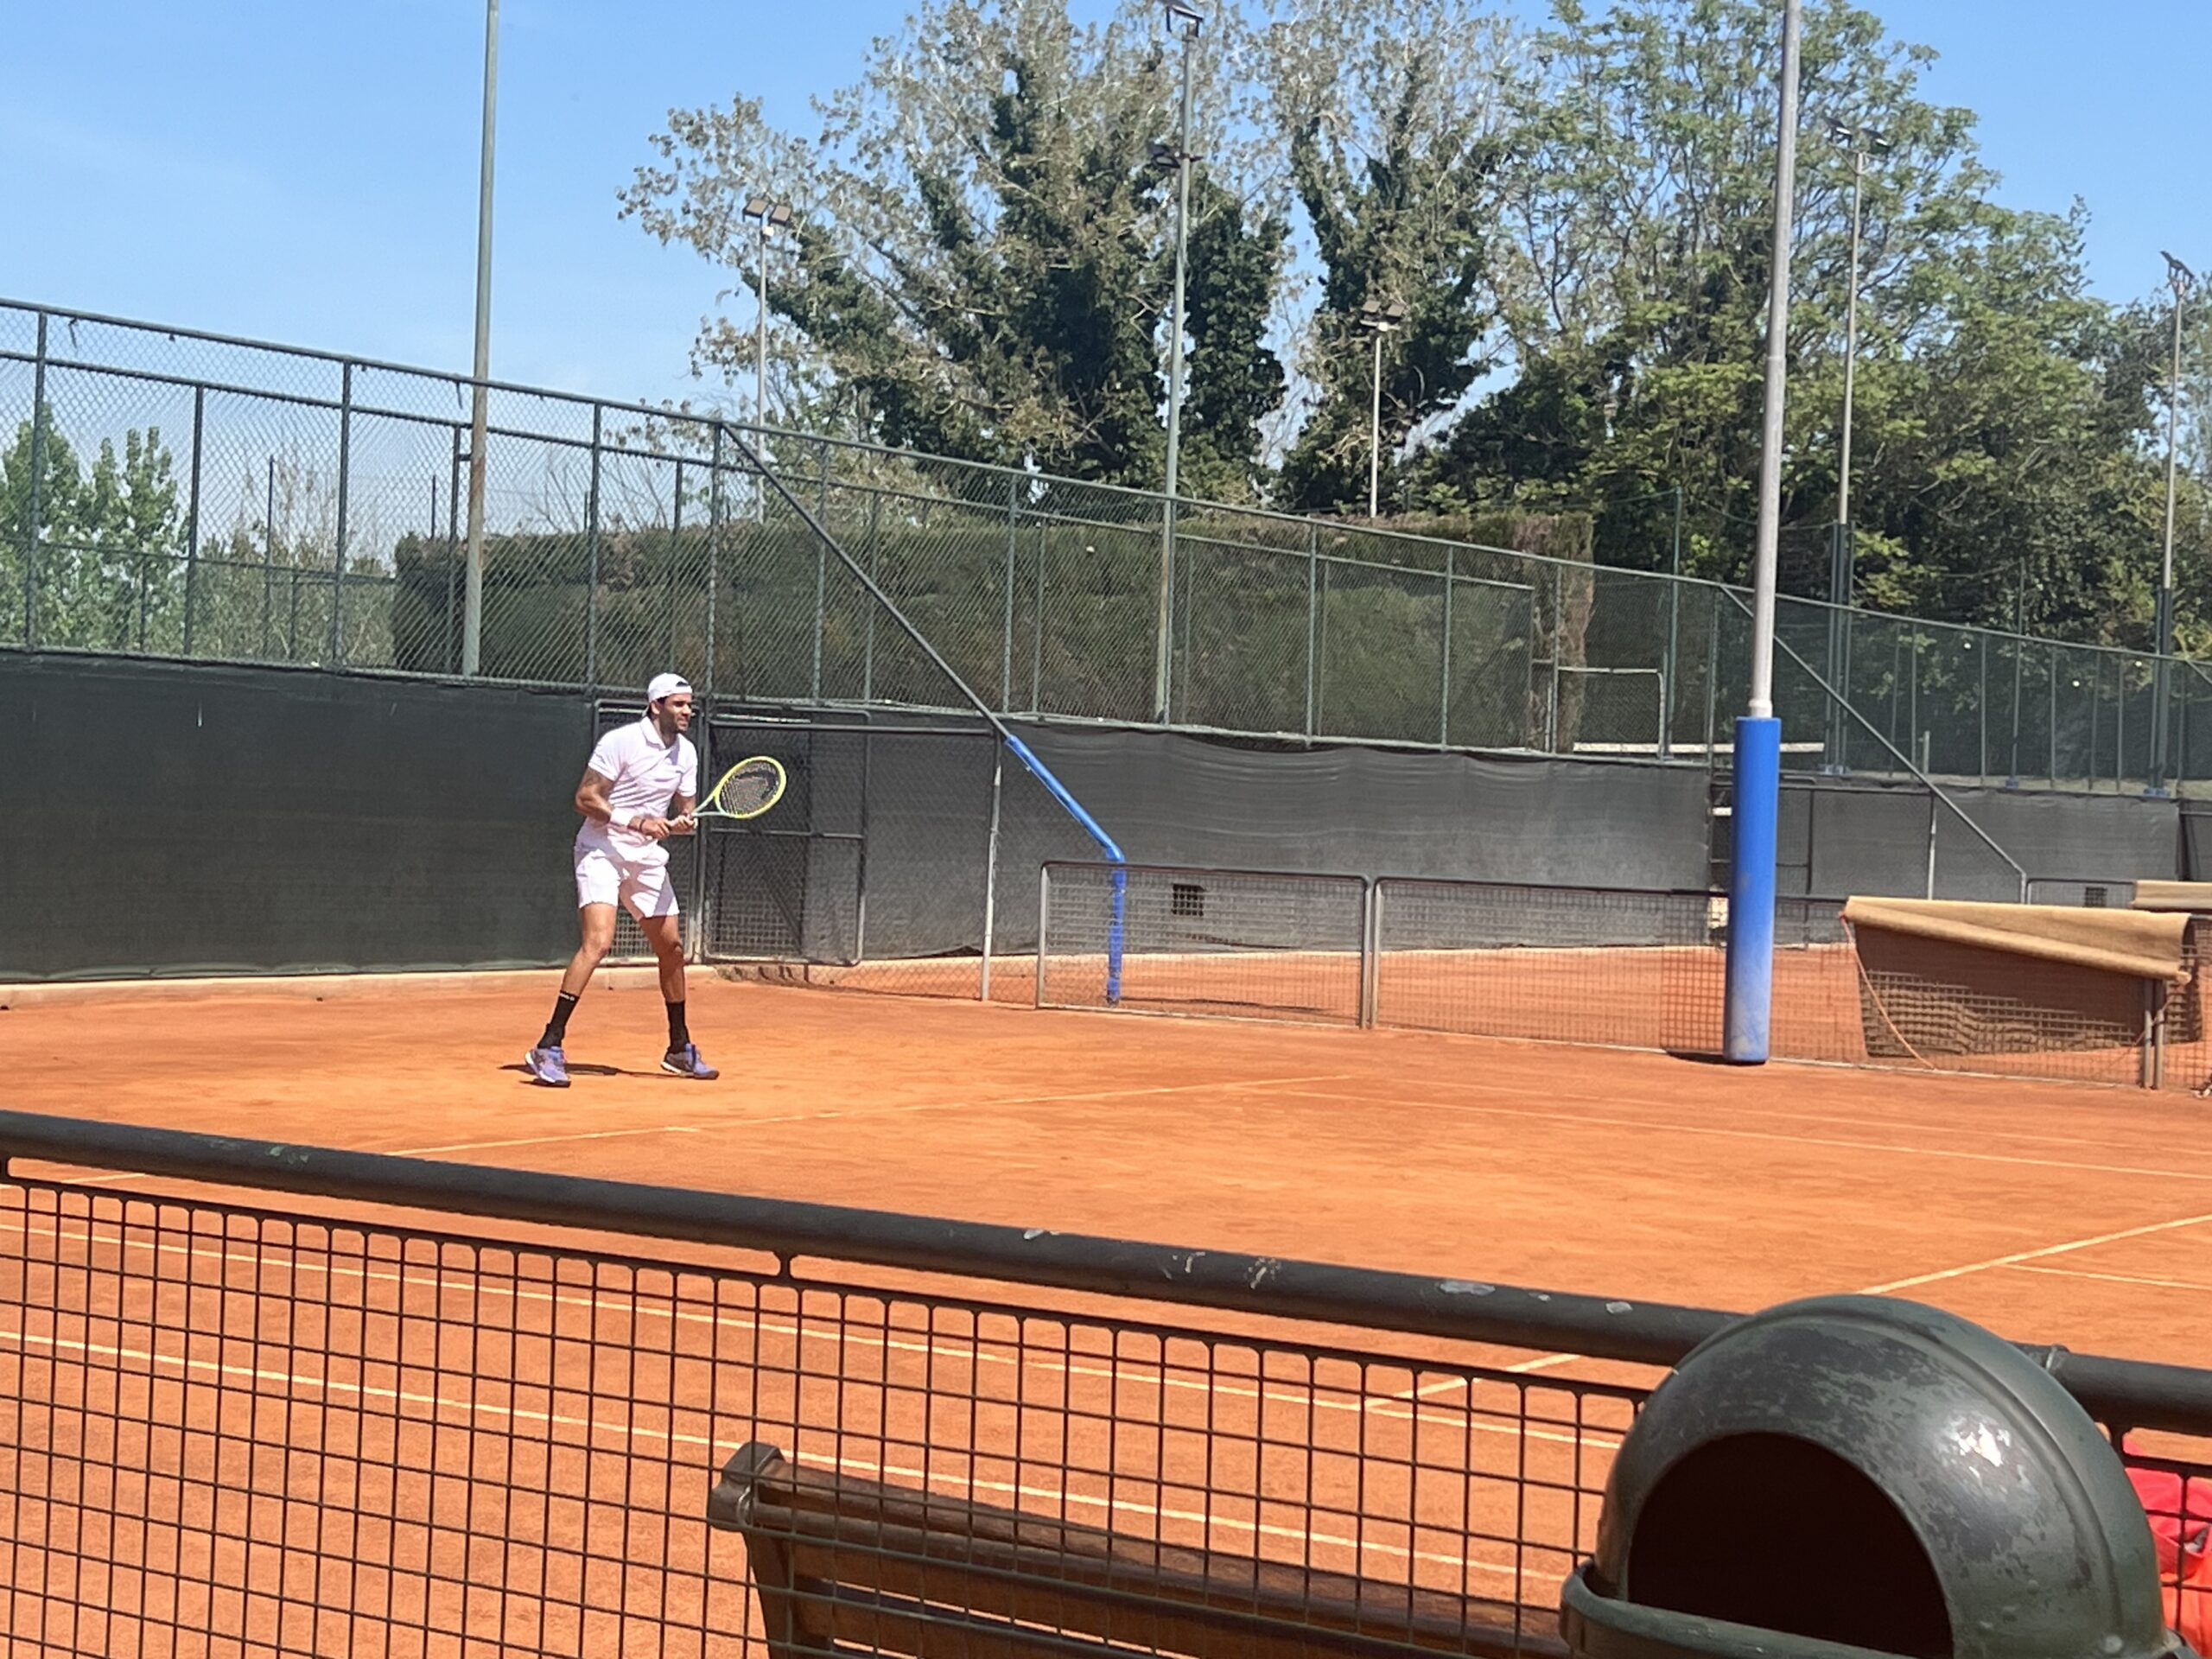 Tennis, Berrettini brothers